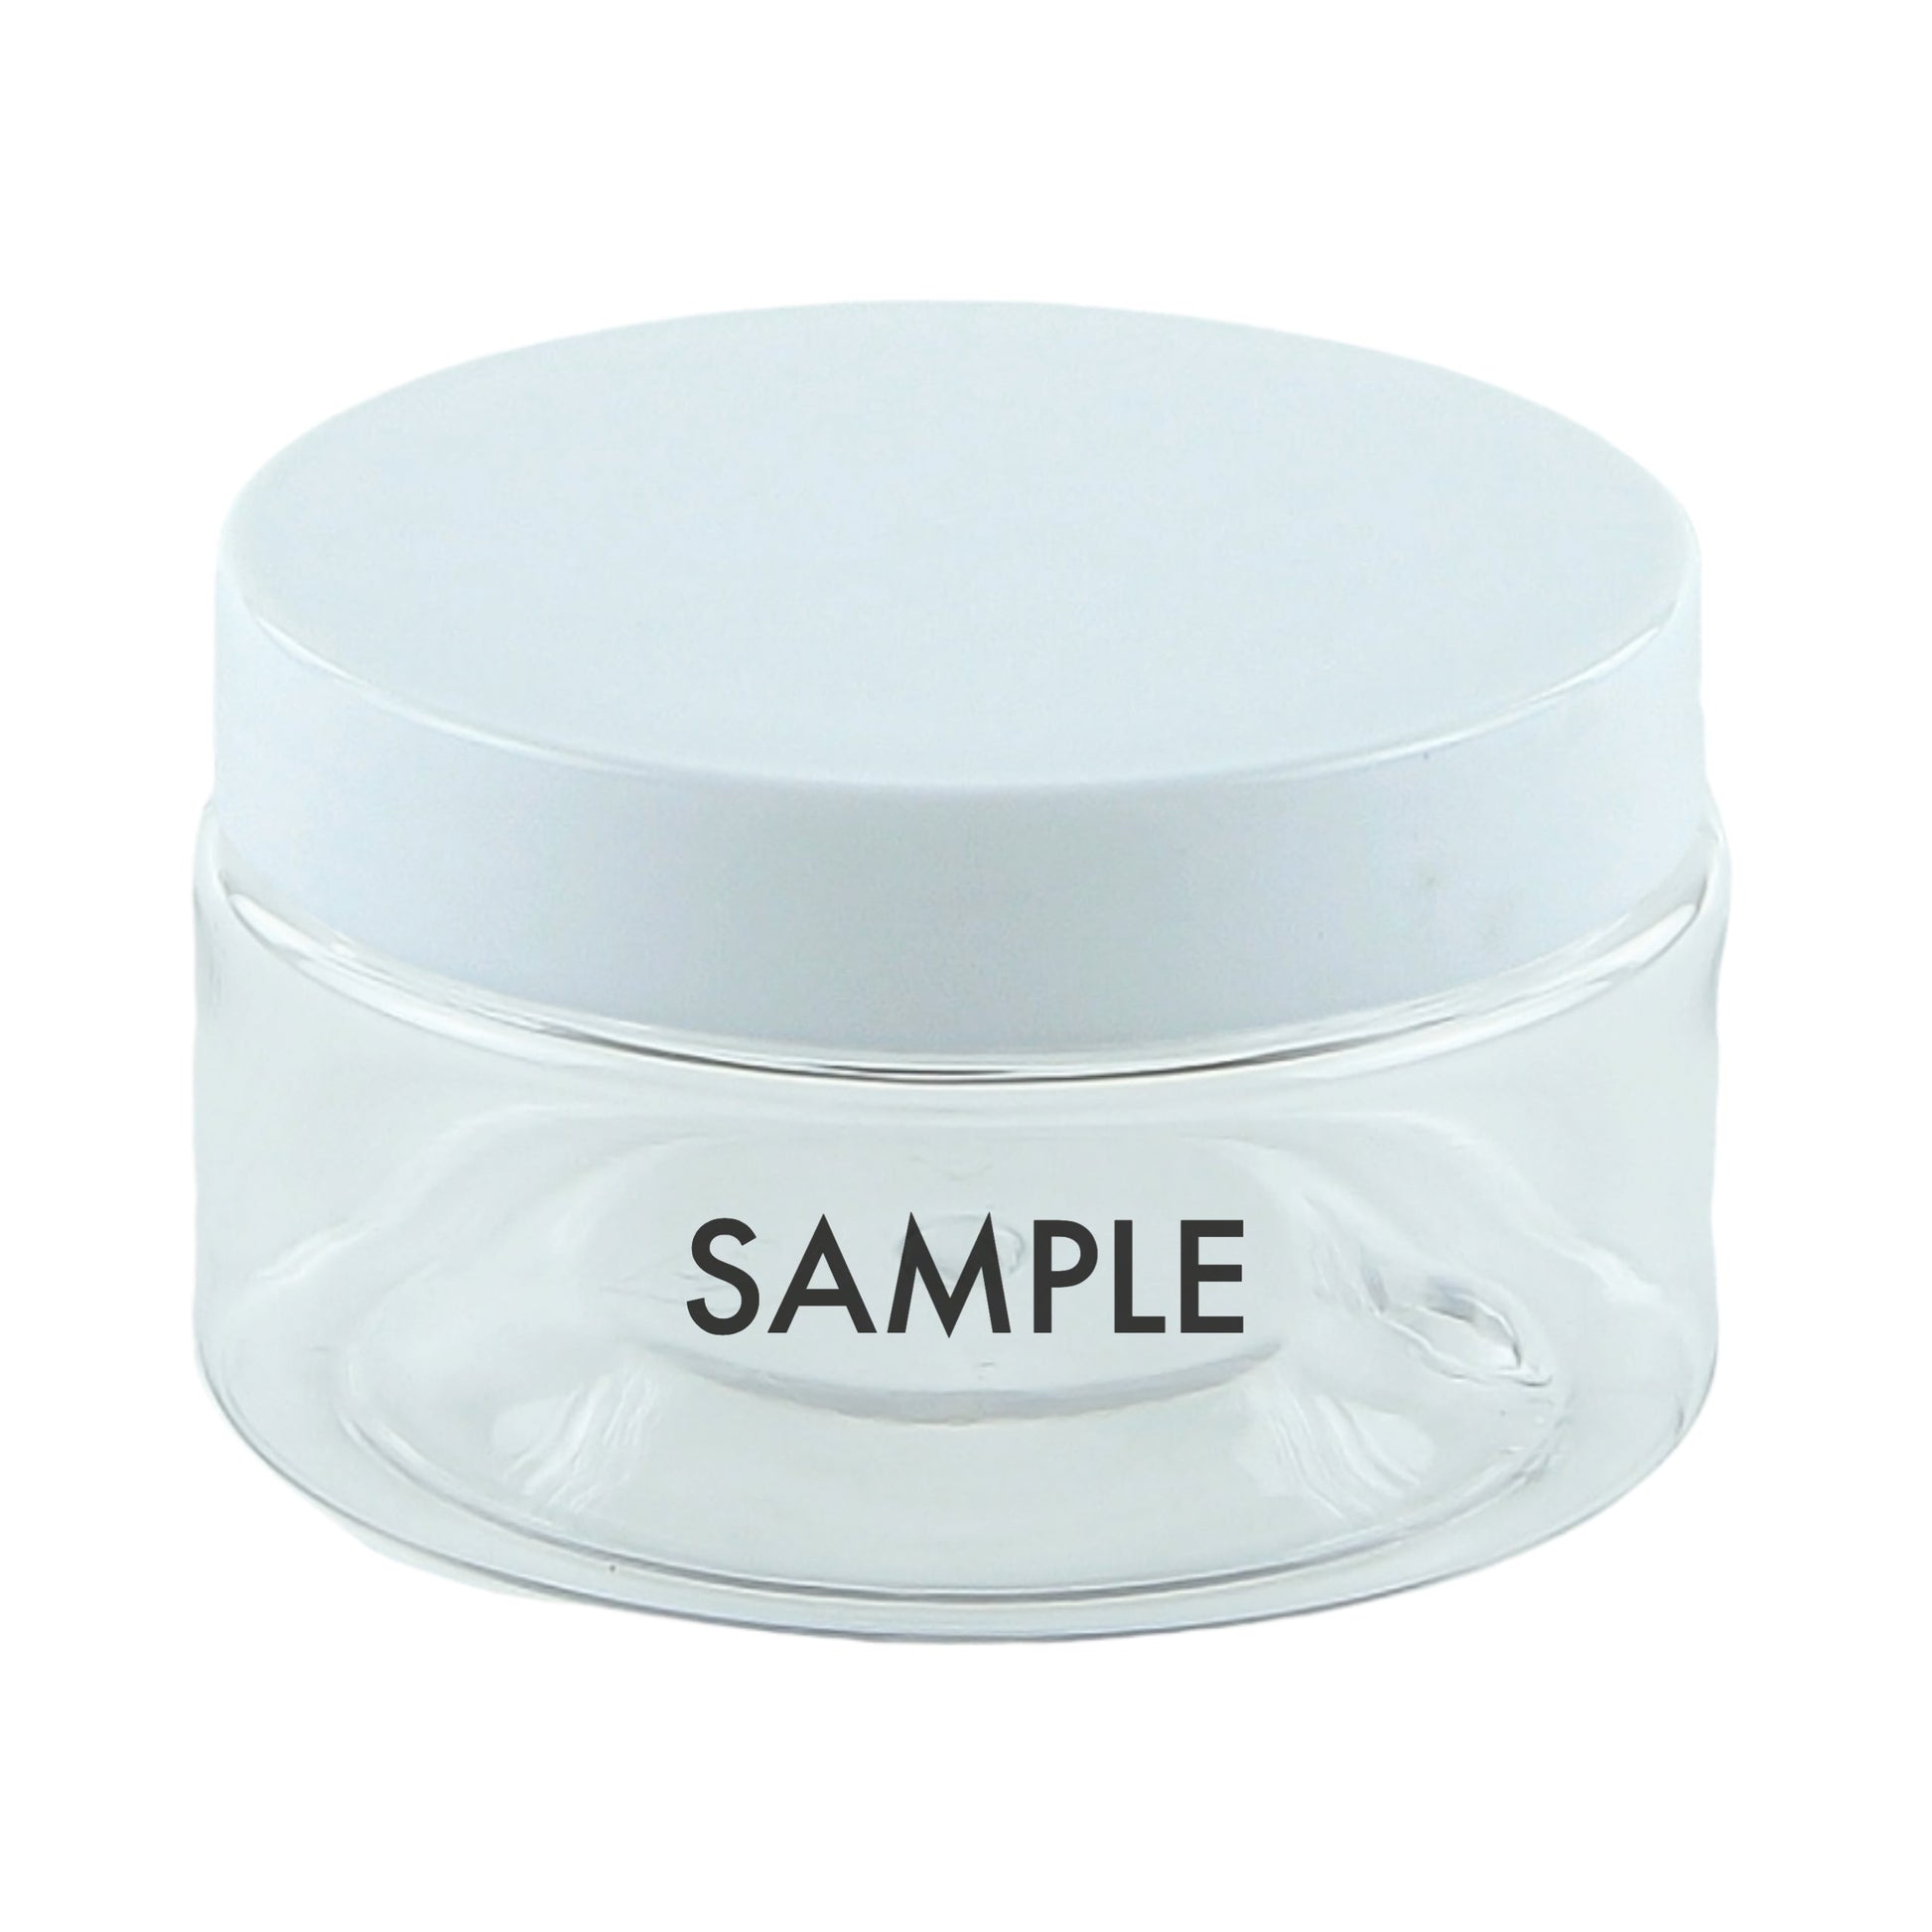 Coconut Body Butter-Cellular Cosmetics Private Label Skin Care Australian Cosmetic Manufacturer